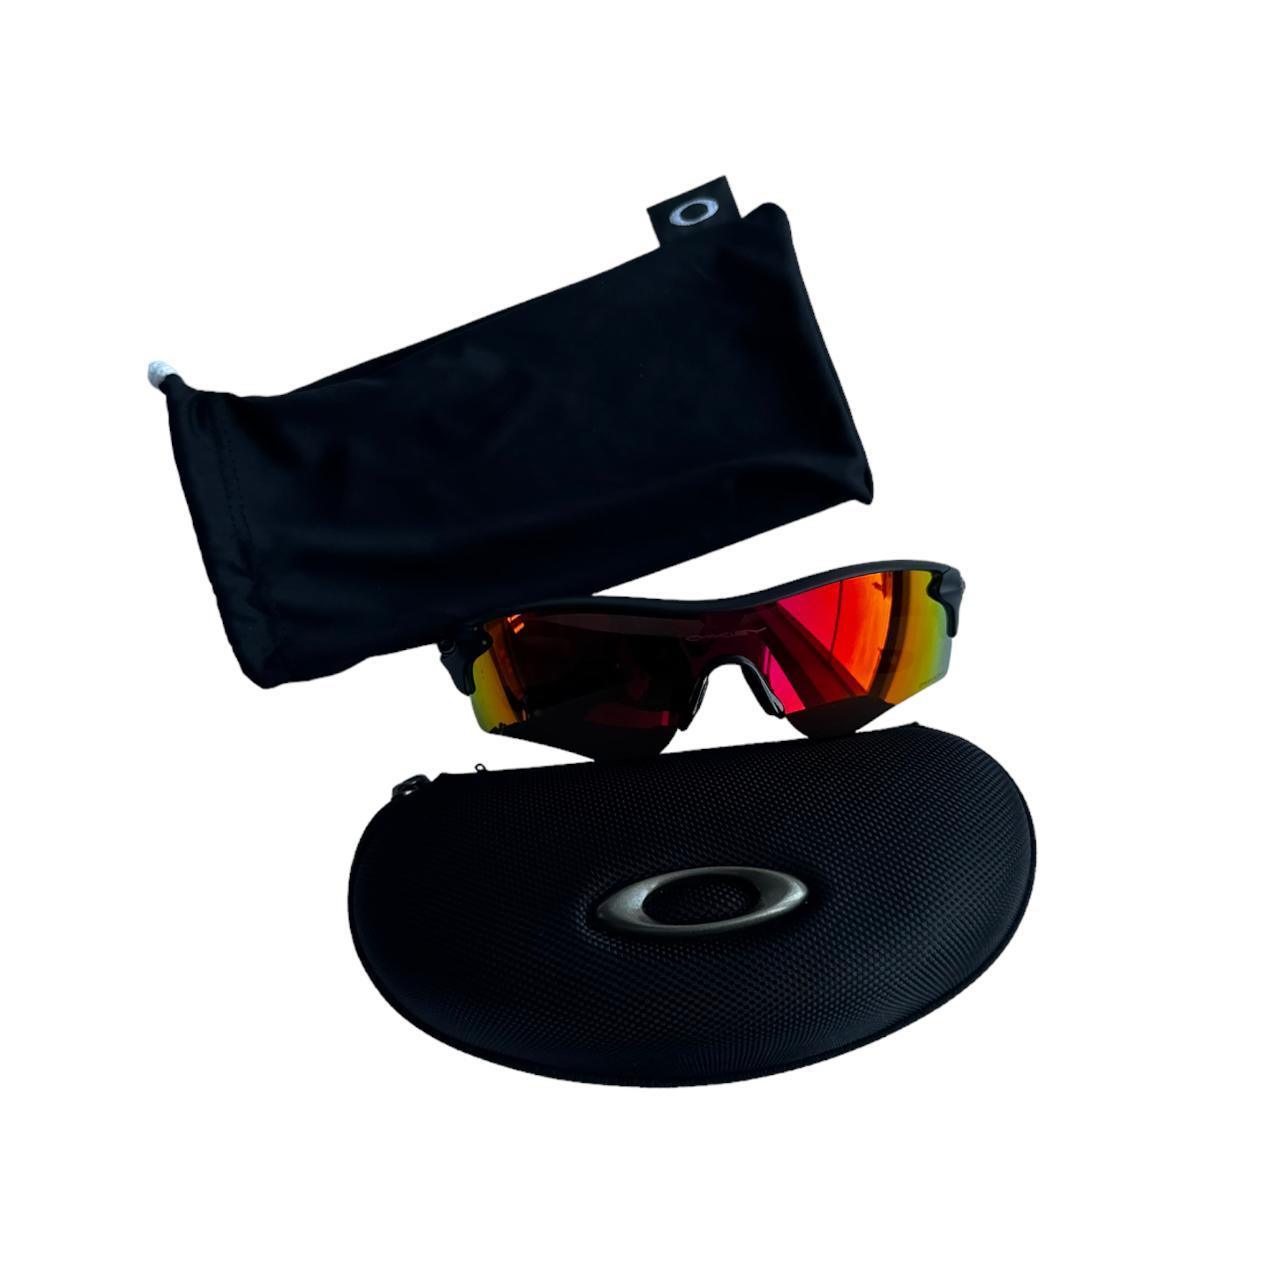 Oakley RADARLOCK radar lock sports sunglasses Red BLACK - Known Source